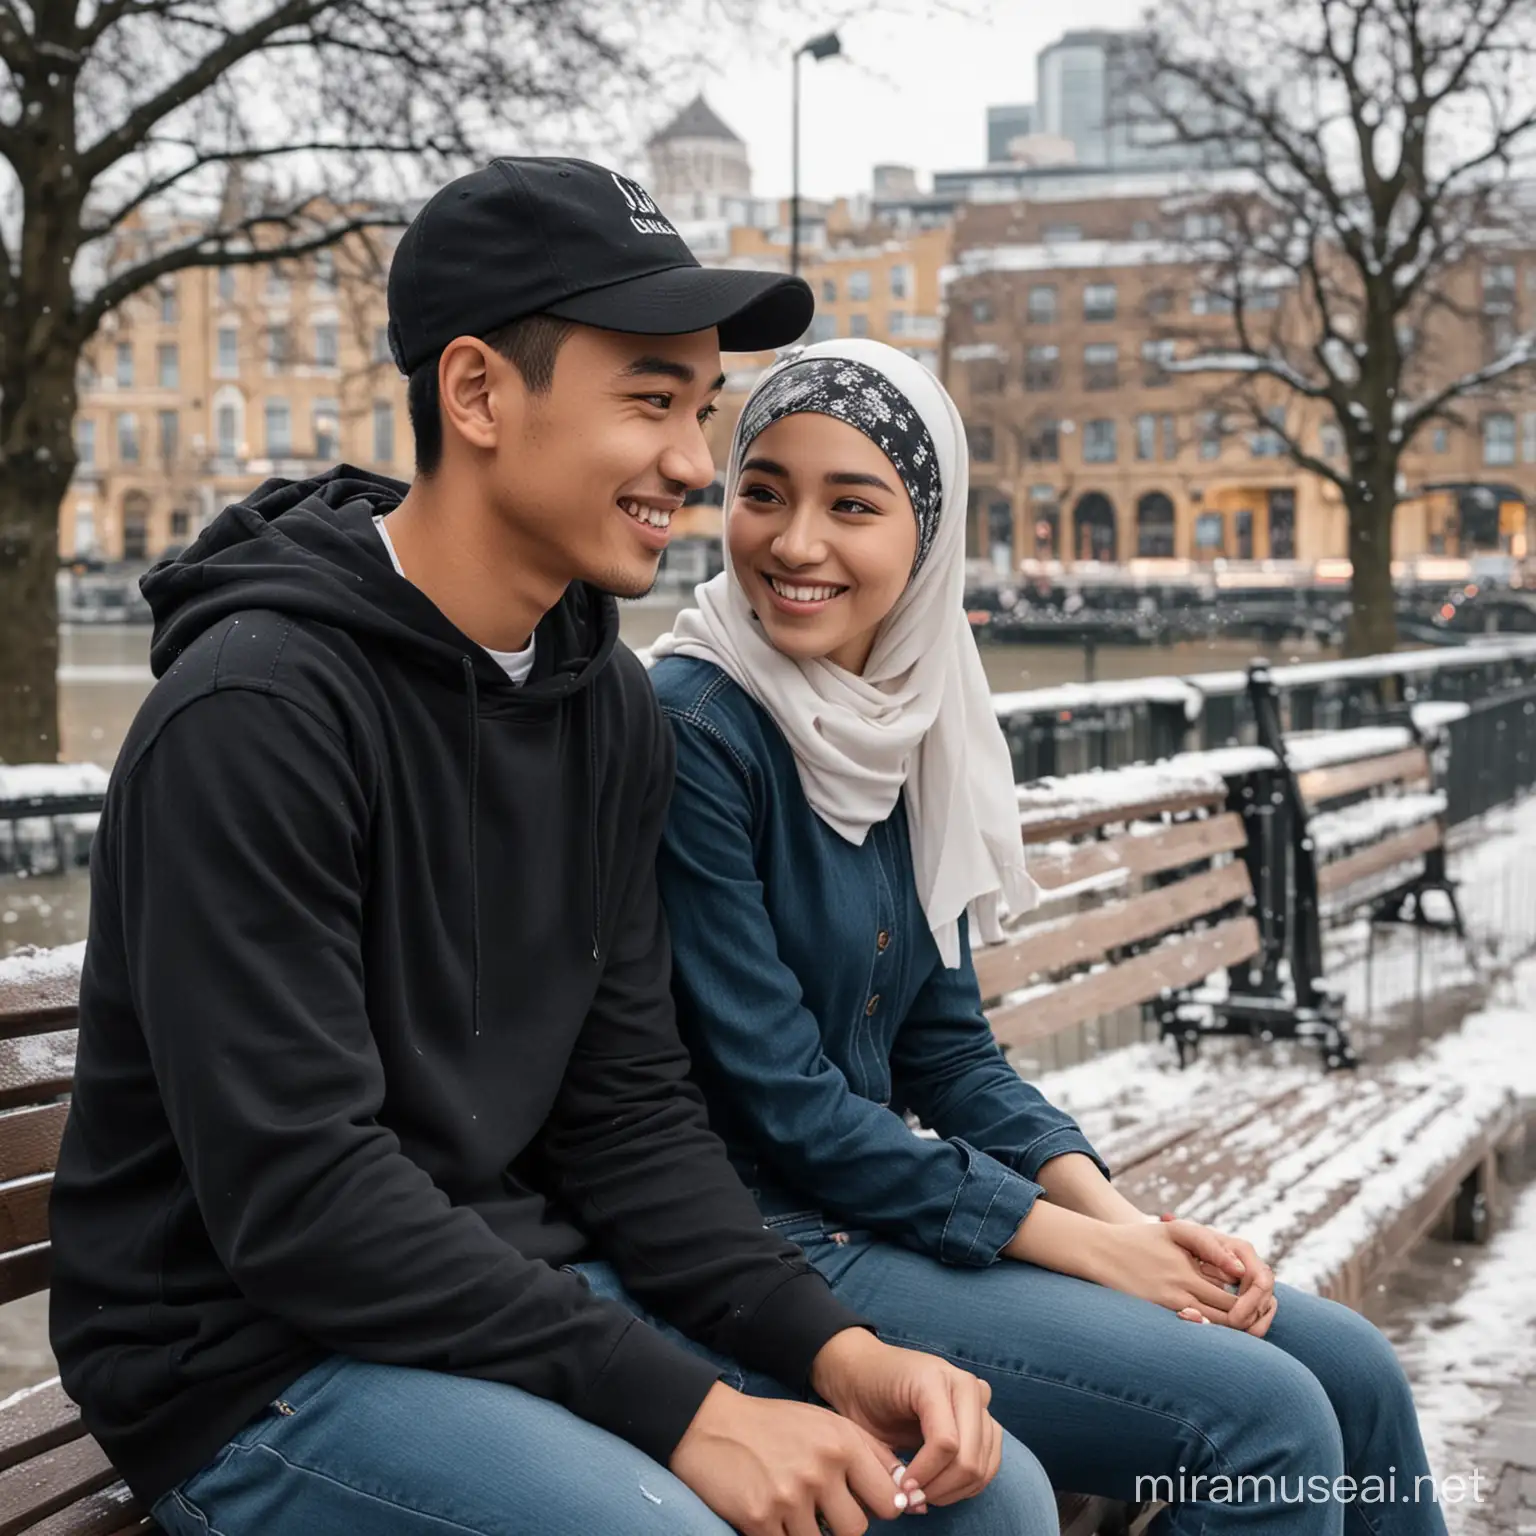 Interconnected Couple Enjoying Snowy Park Bench Moment near London City Bridge